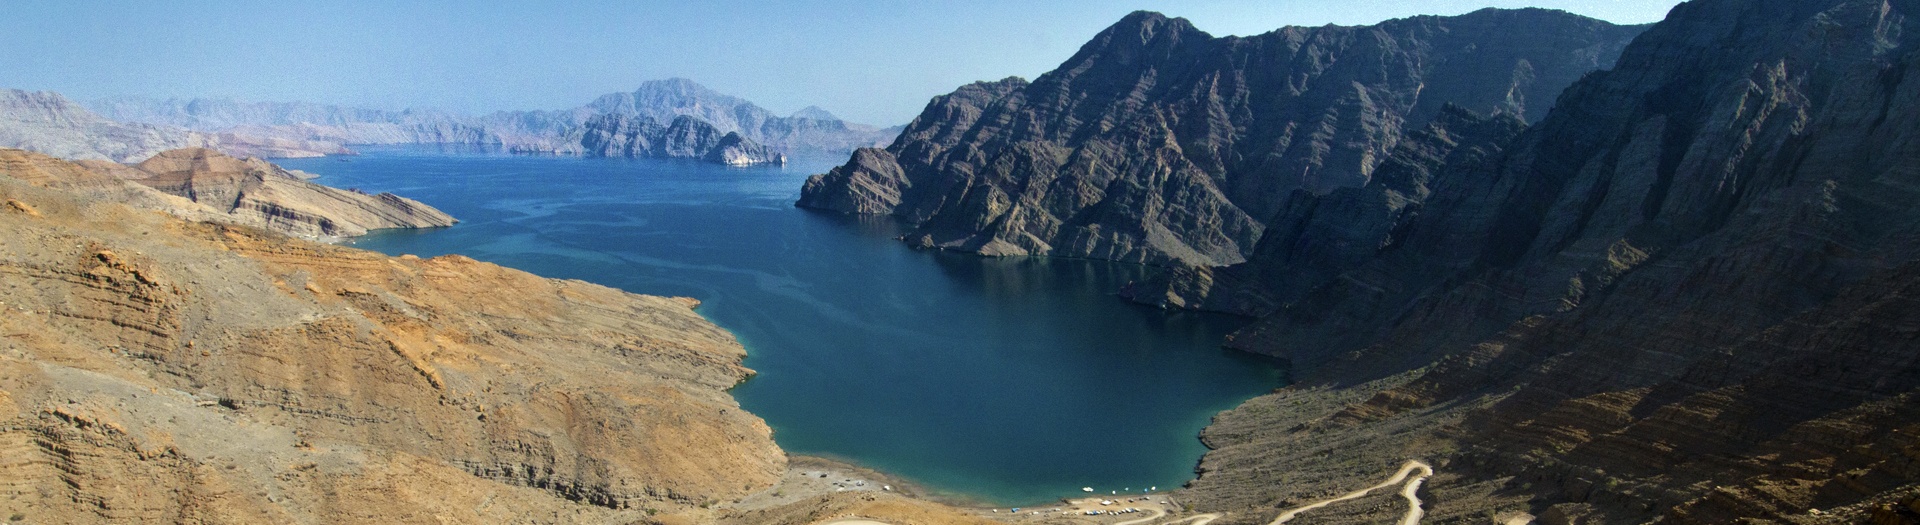 Travel Musandam Governorate peninsula Oman